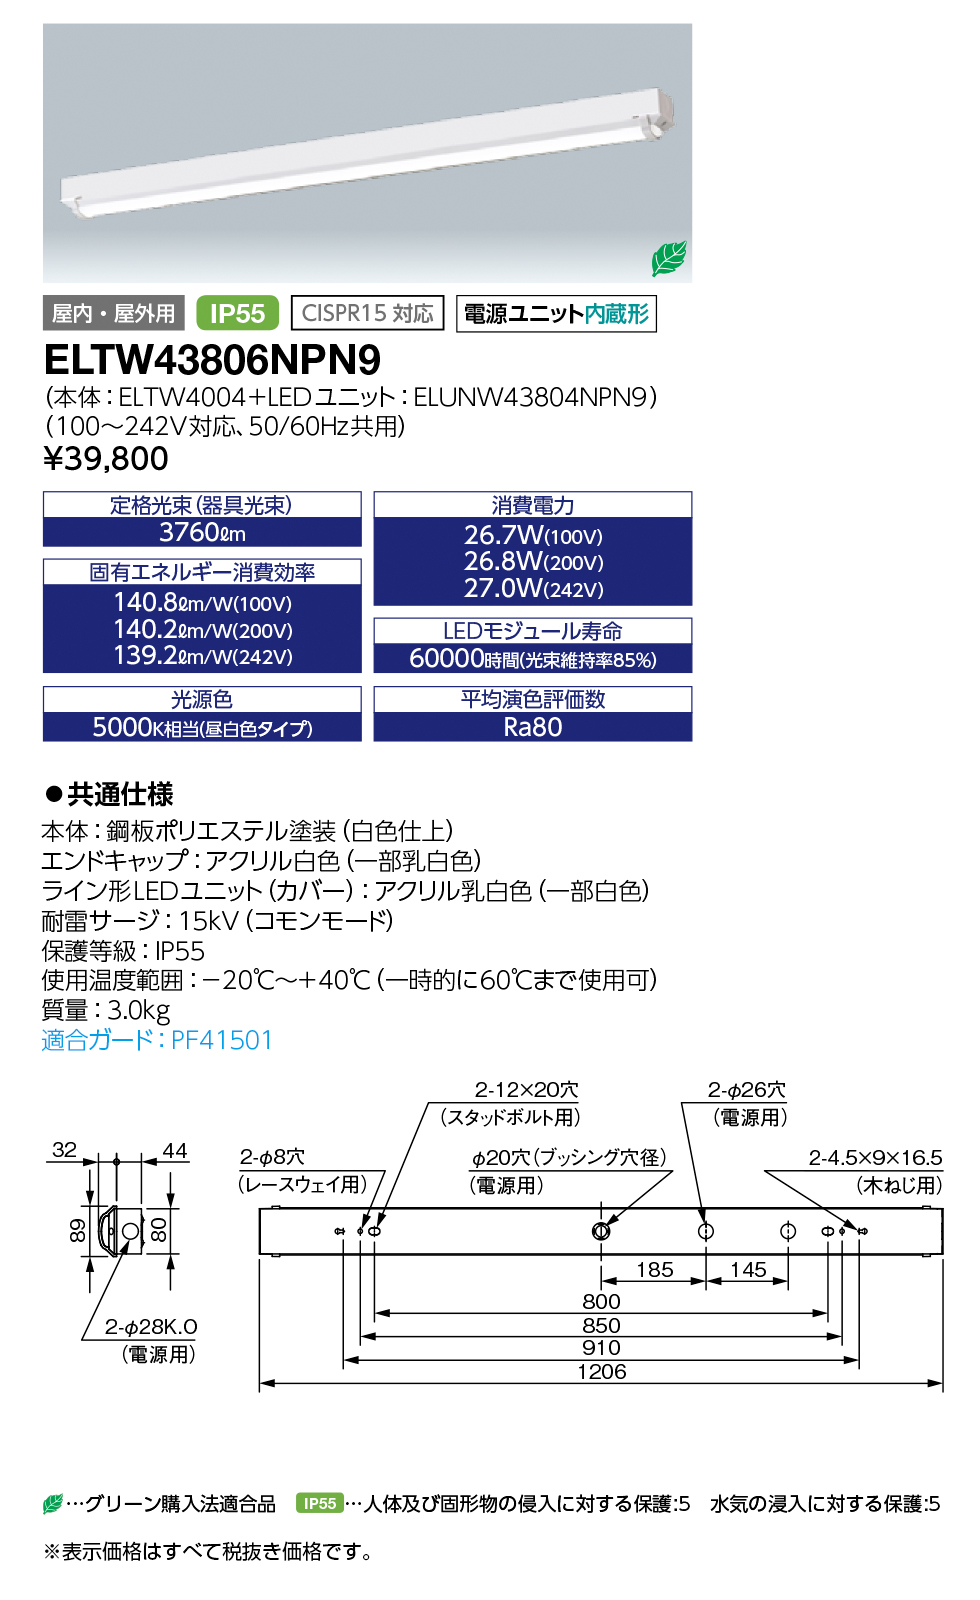 ELTW43806NPN9